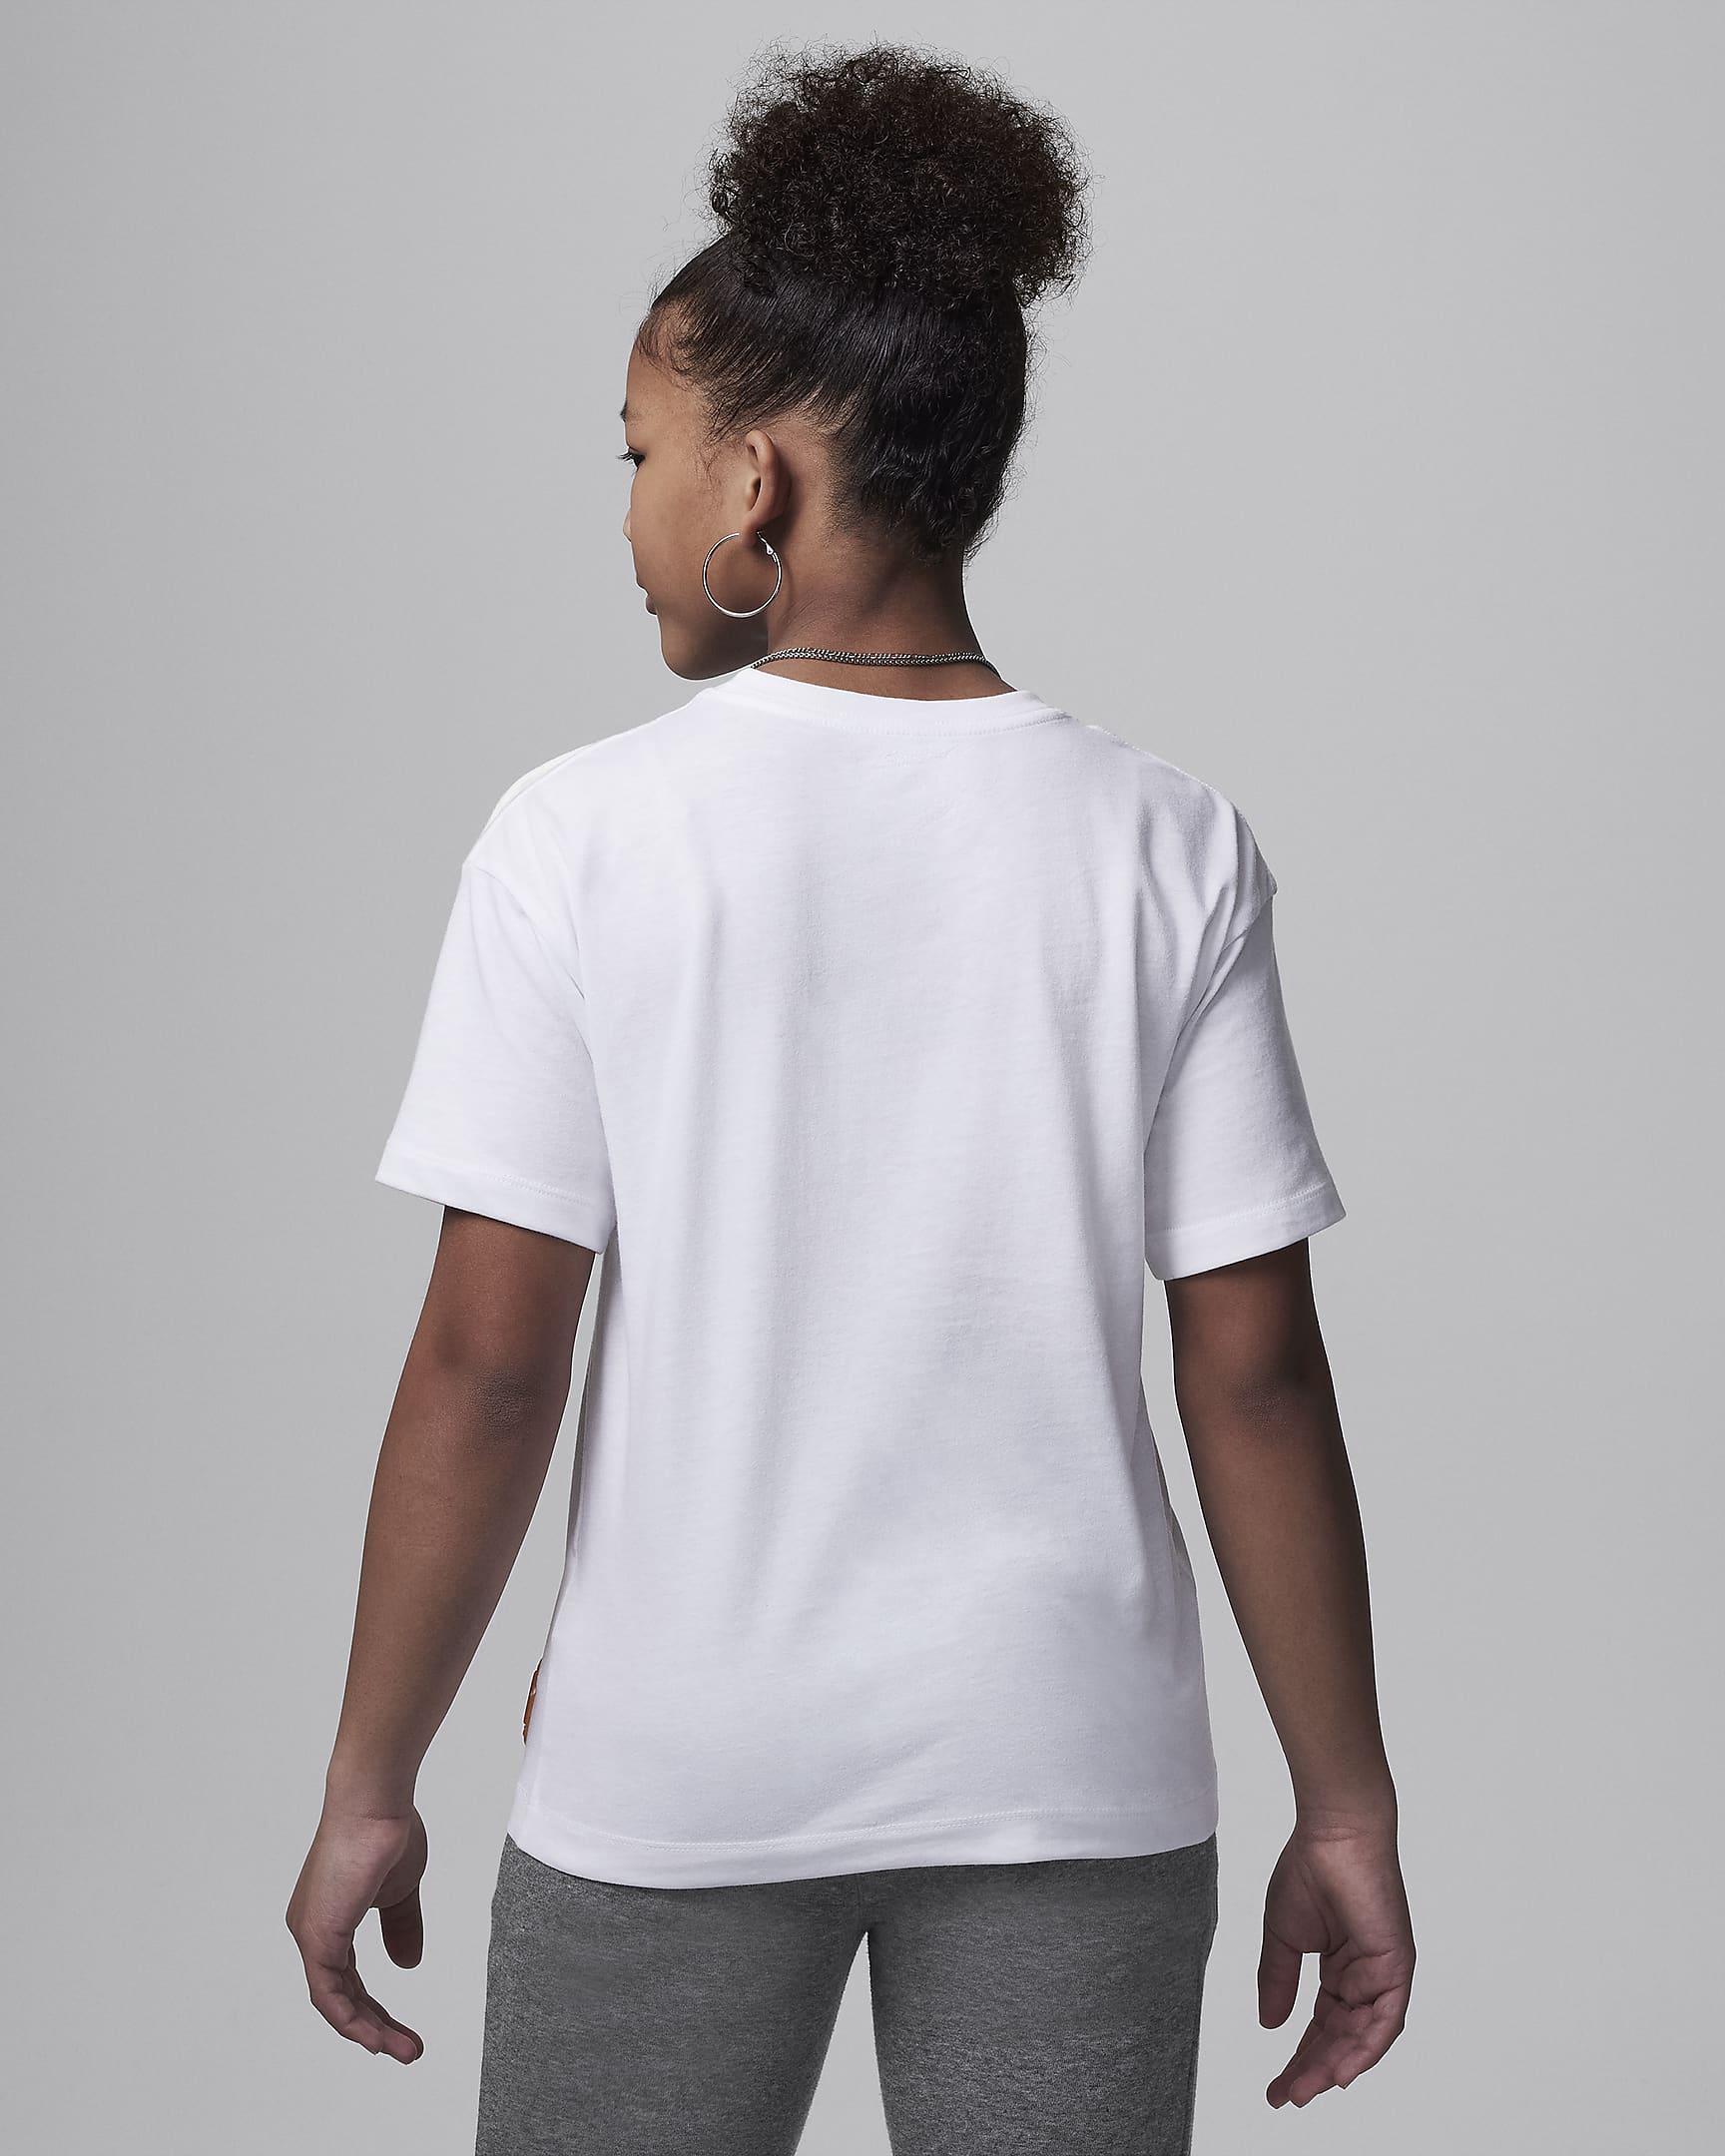 Jordan Fuel Up, Cool Down Big Kids' Liquid Warp T-Shirt. Nike.com